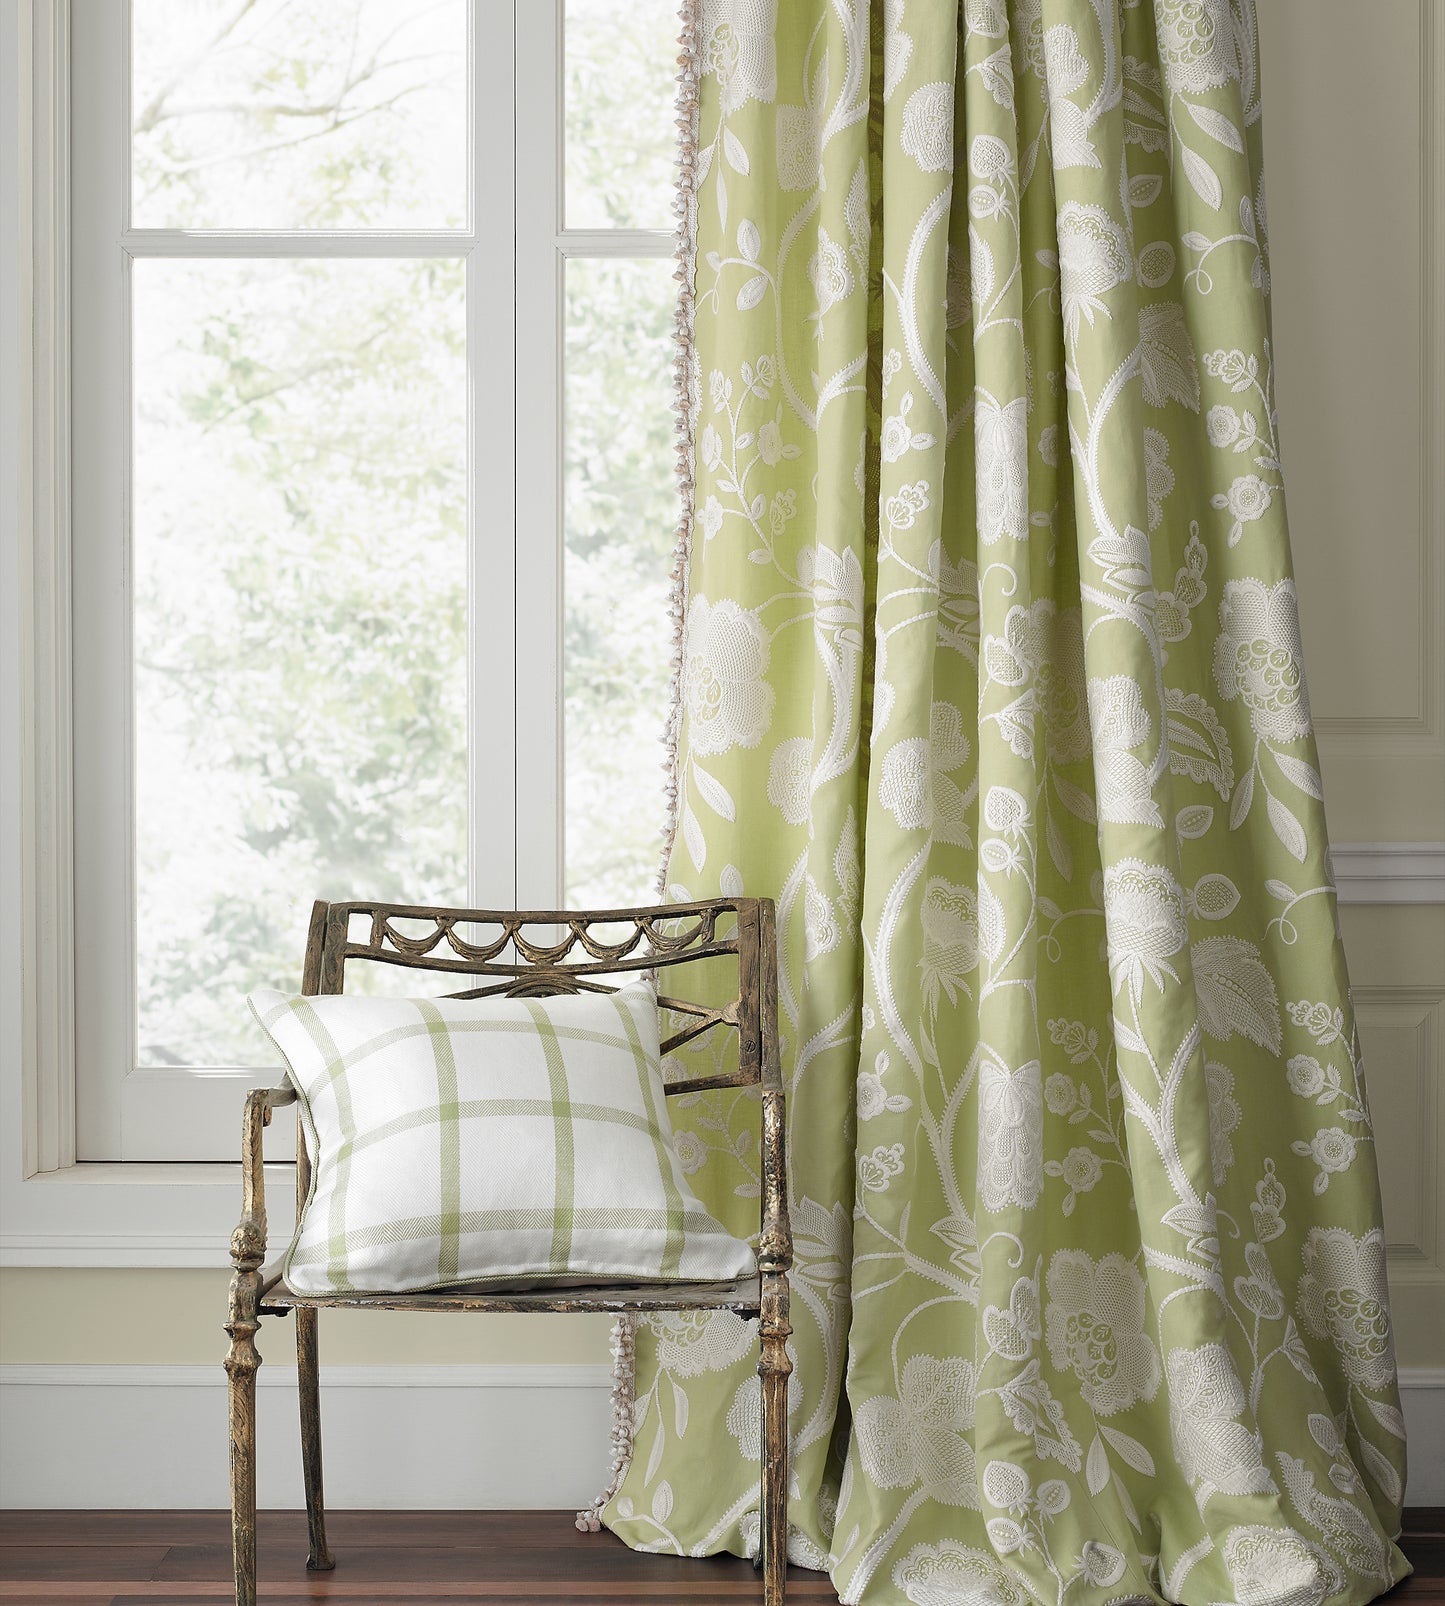 Purchase Scalamandre Fabric Product# SC 000227152, Wilton Linen Check Green Tea 2